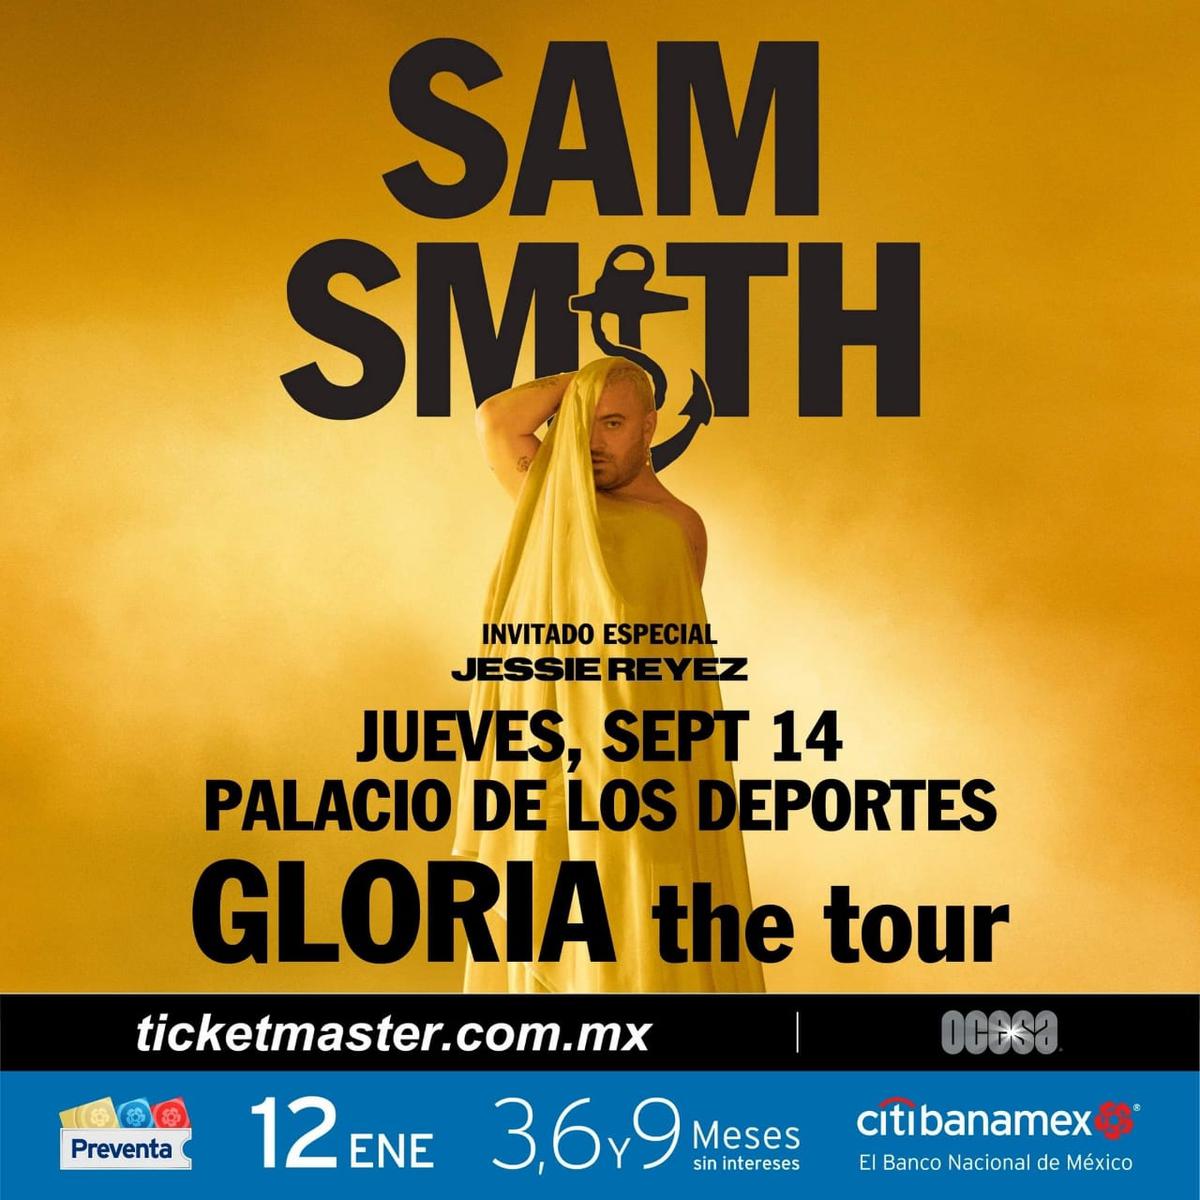  | ¡Ya hay fecha para ver a Sam Smith en México!